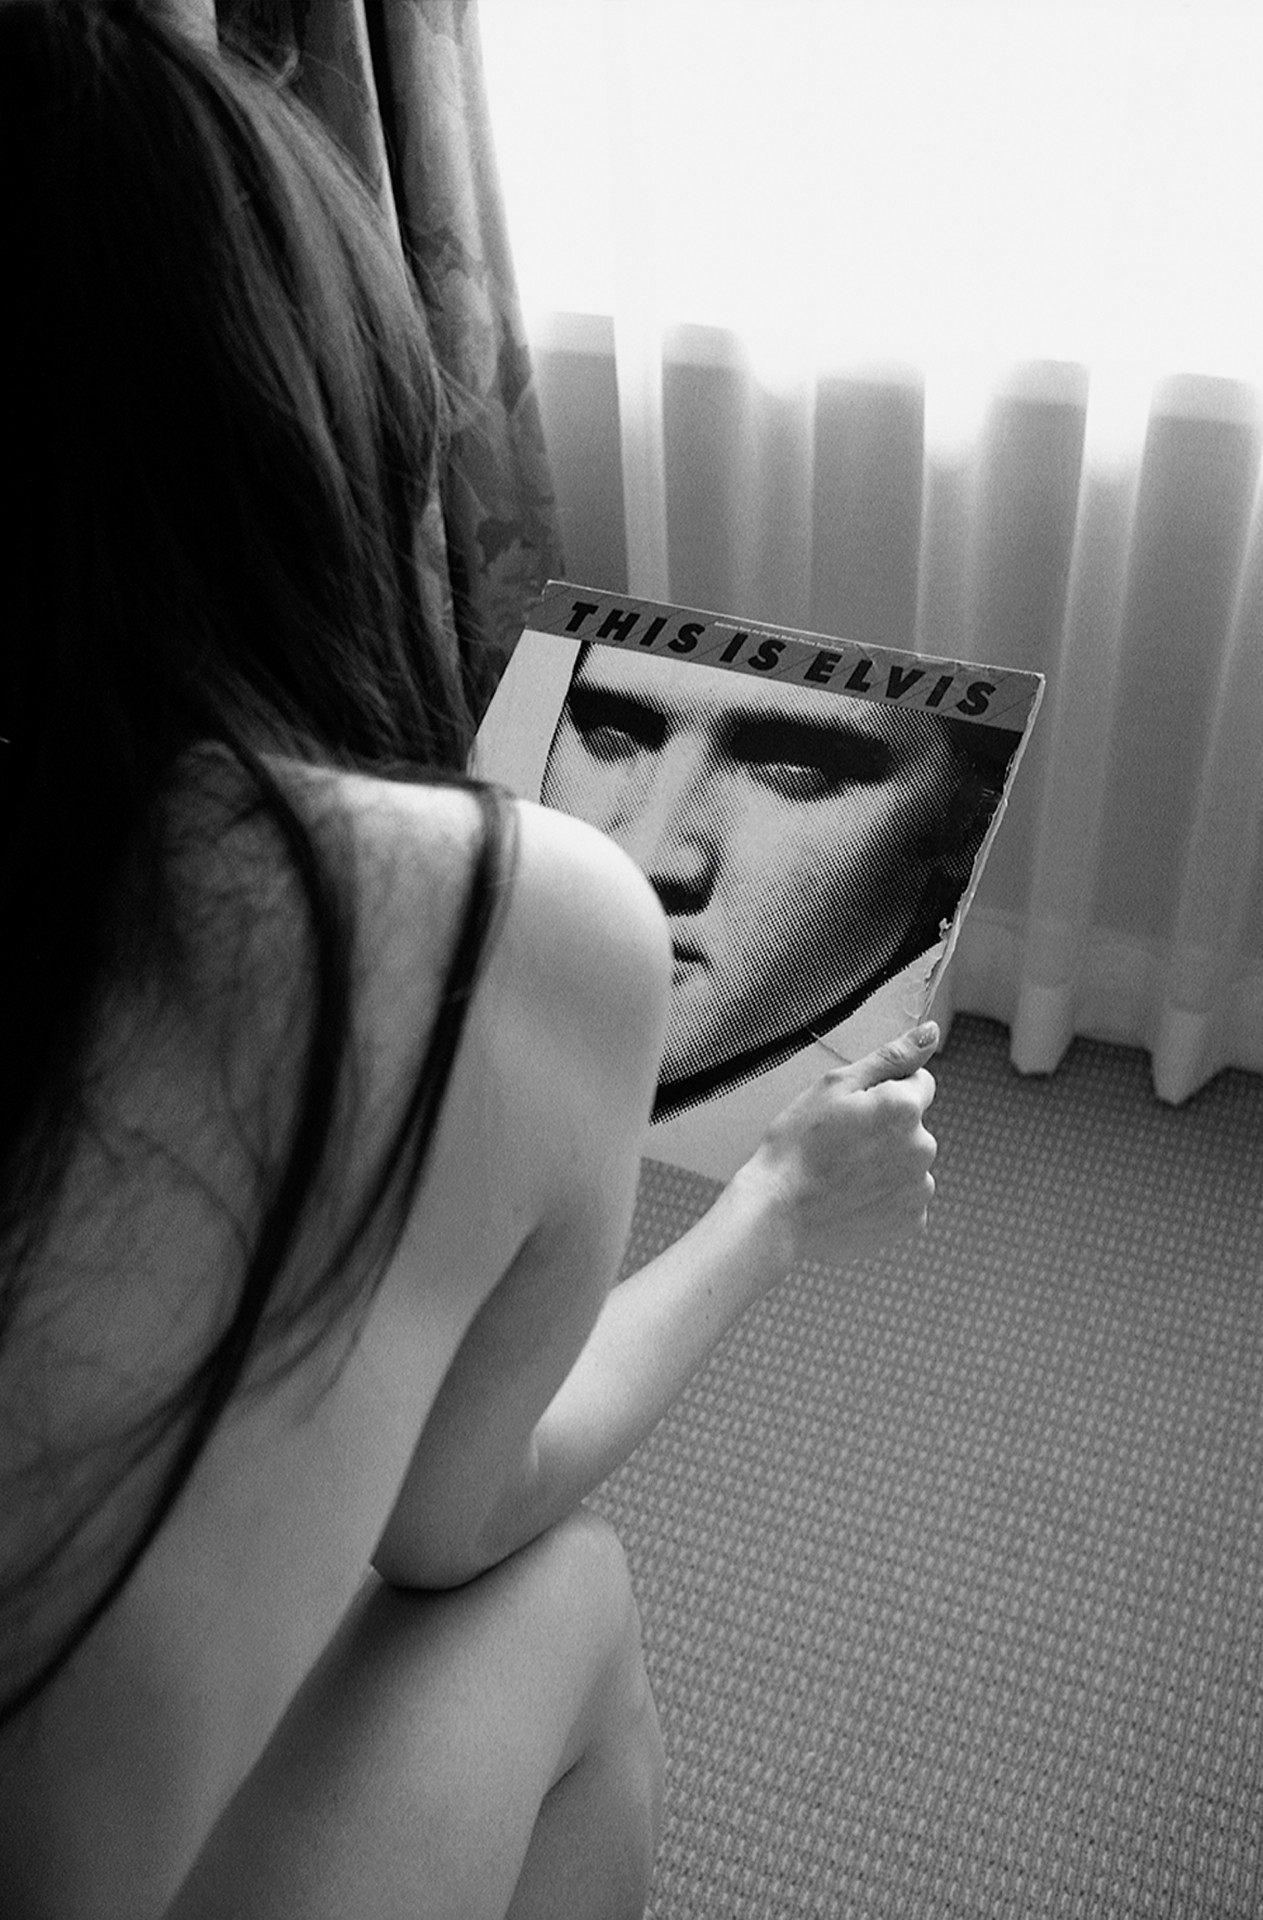 Woman looking at an Elvis album